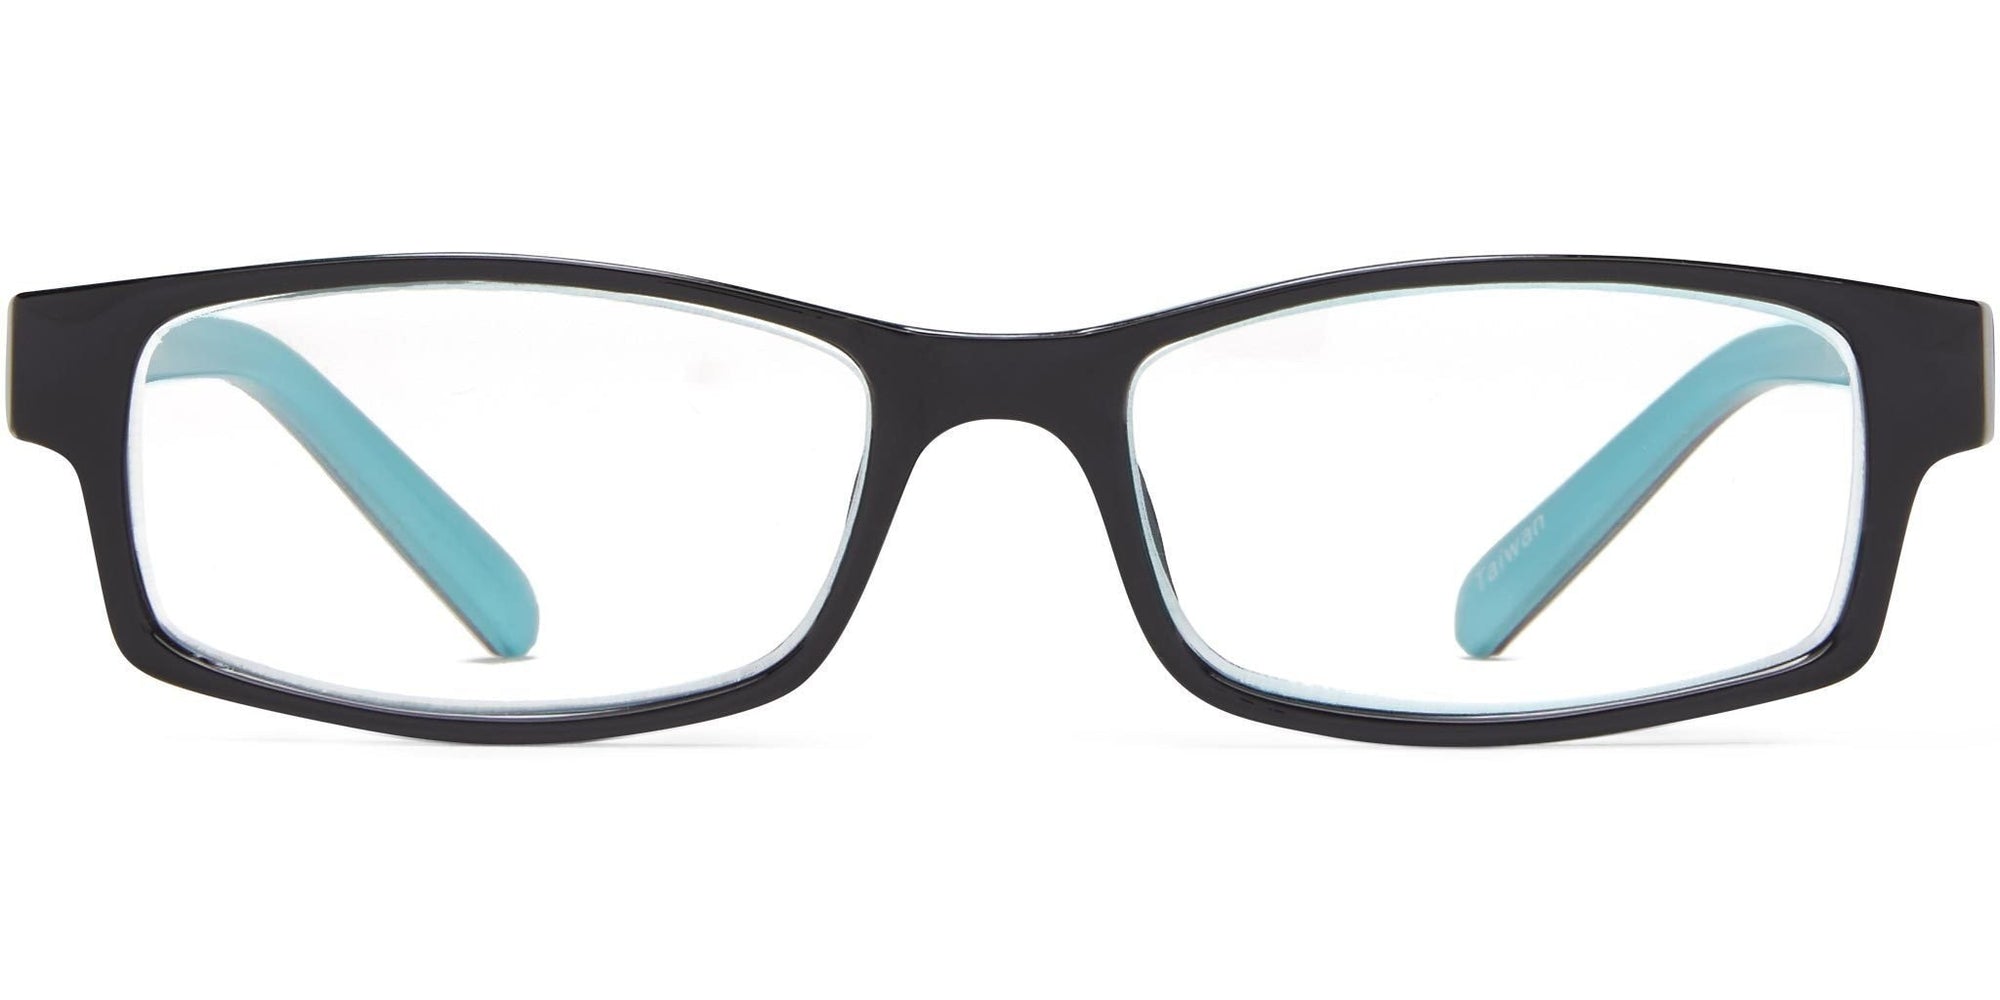  I.C.U. Eyewear Reading Glasses - Esquel - Red - +1.75  (77074303) : Health & Household